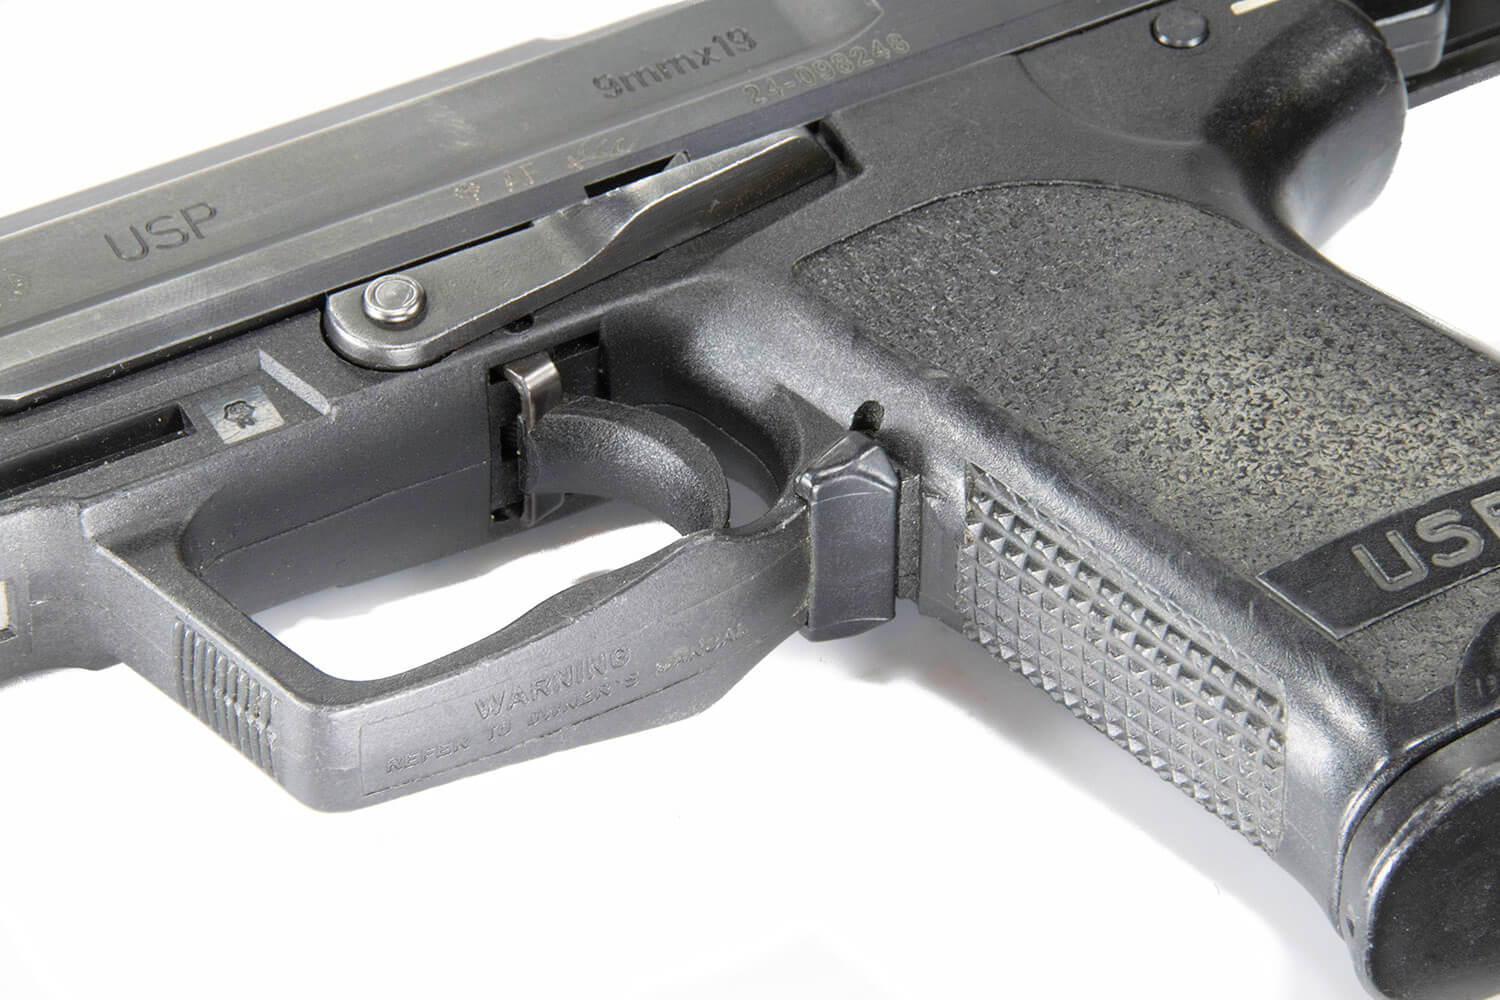 HK USP Compact .45 Auto Police Trade-In Pistol